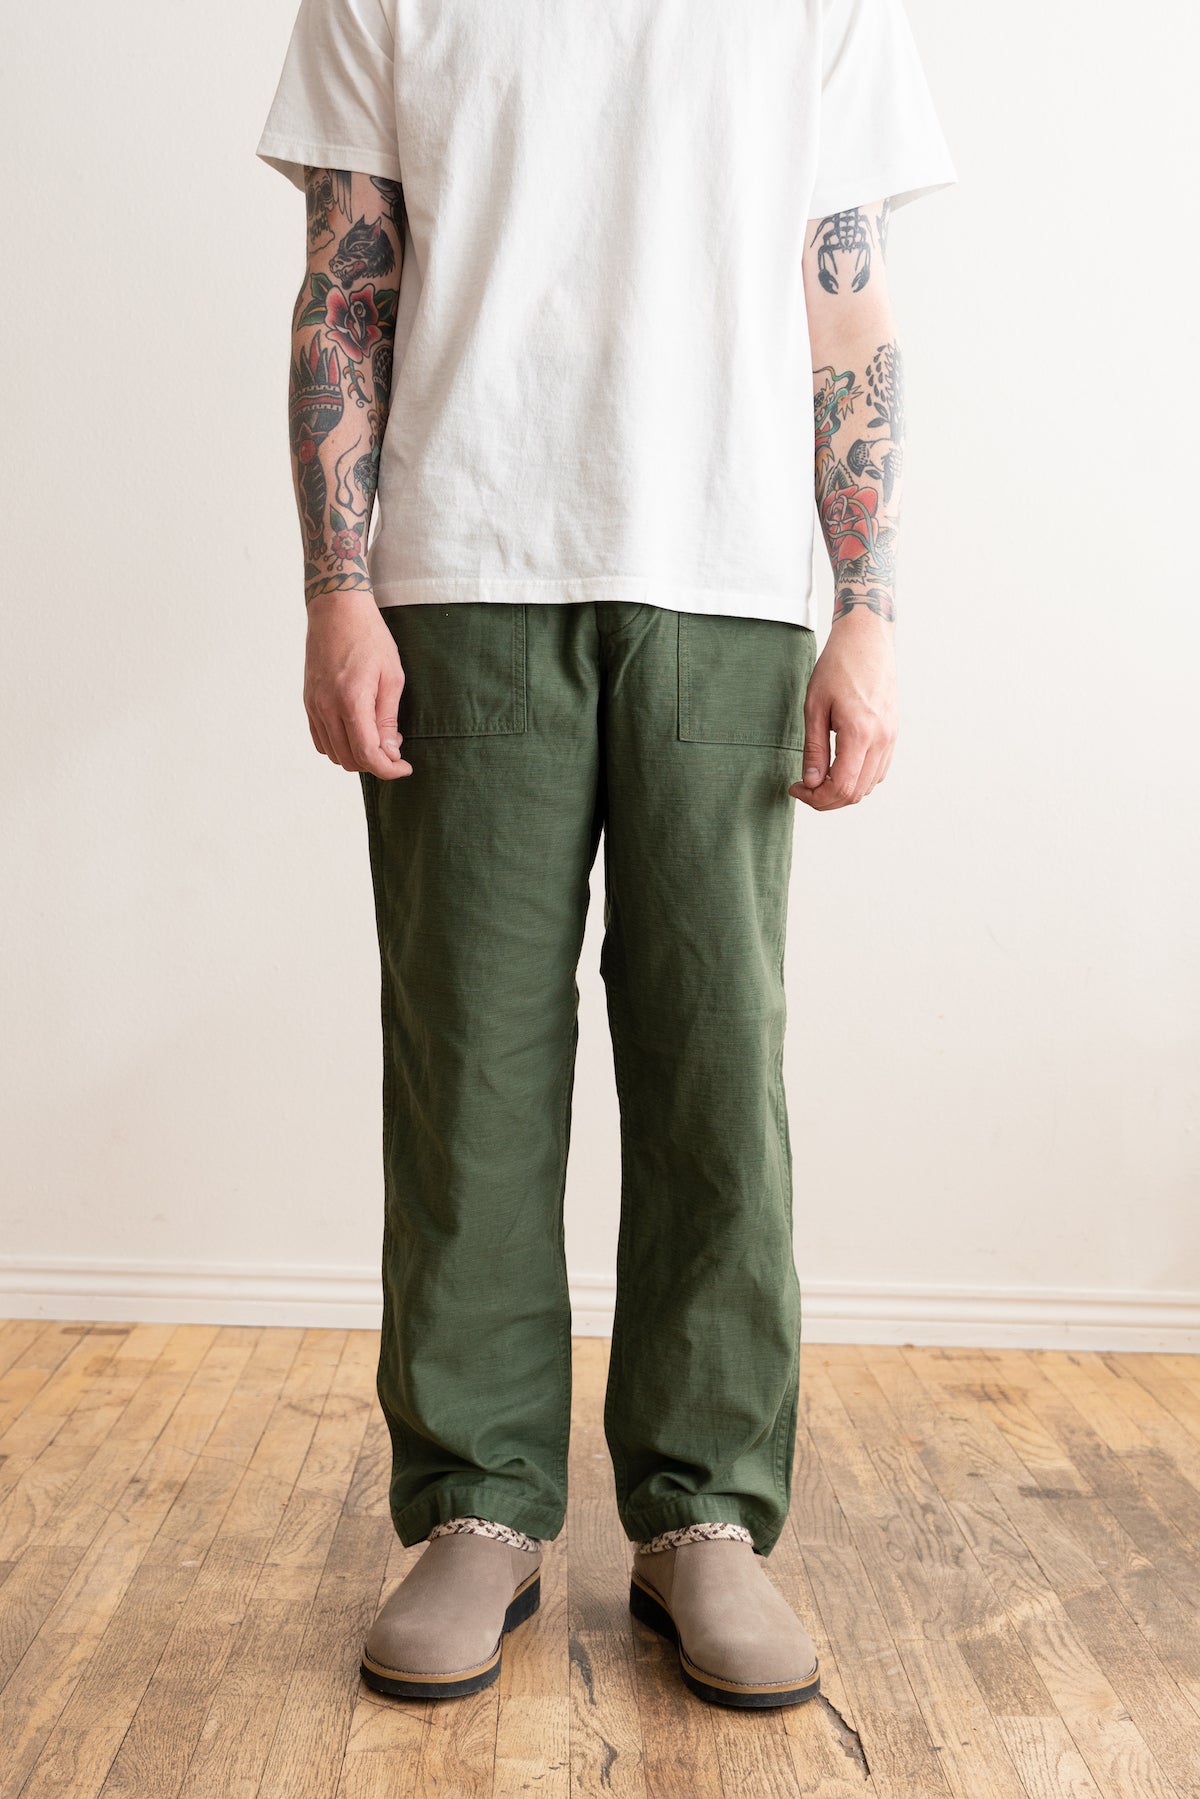 US Army Fatigue Pants (Regular Fit) - Green